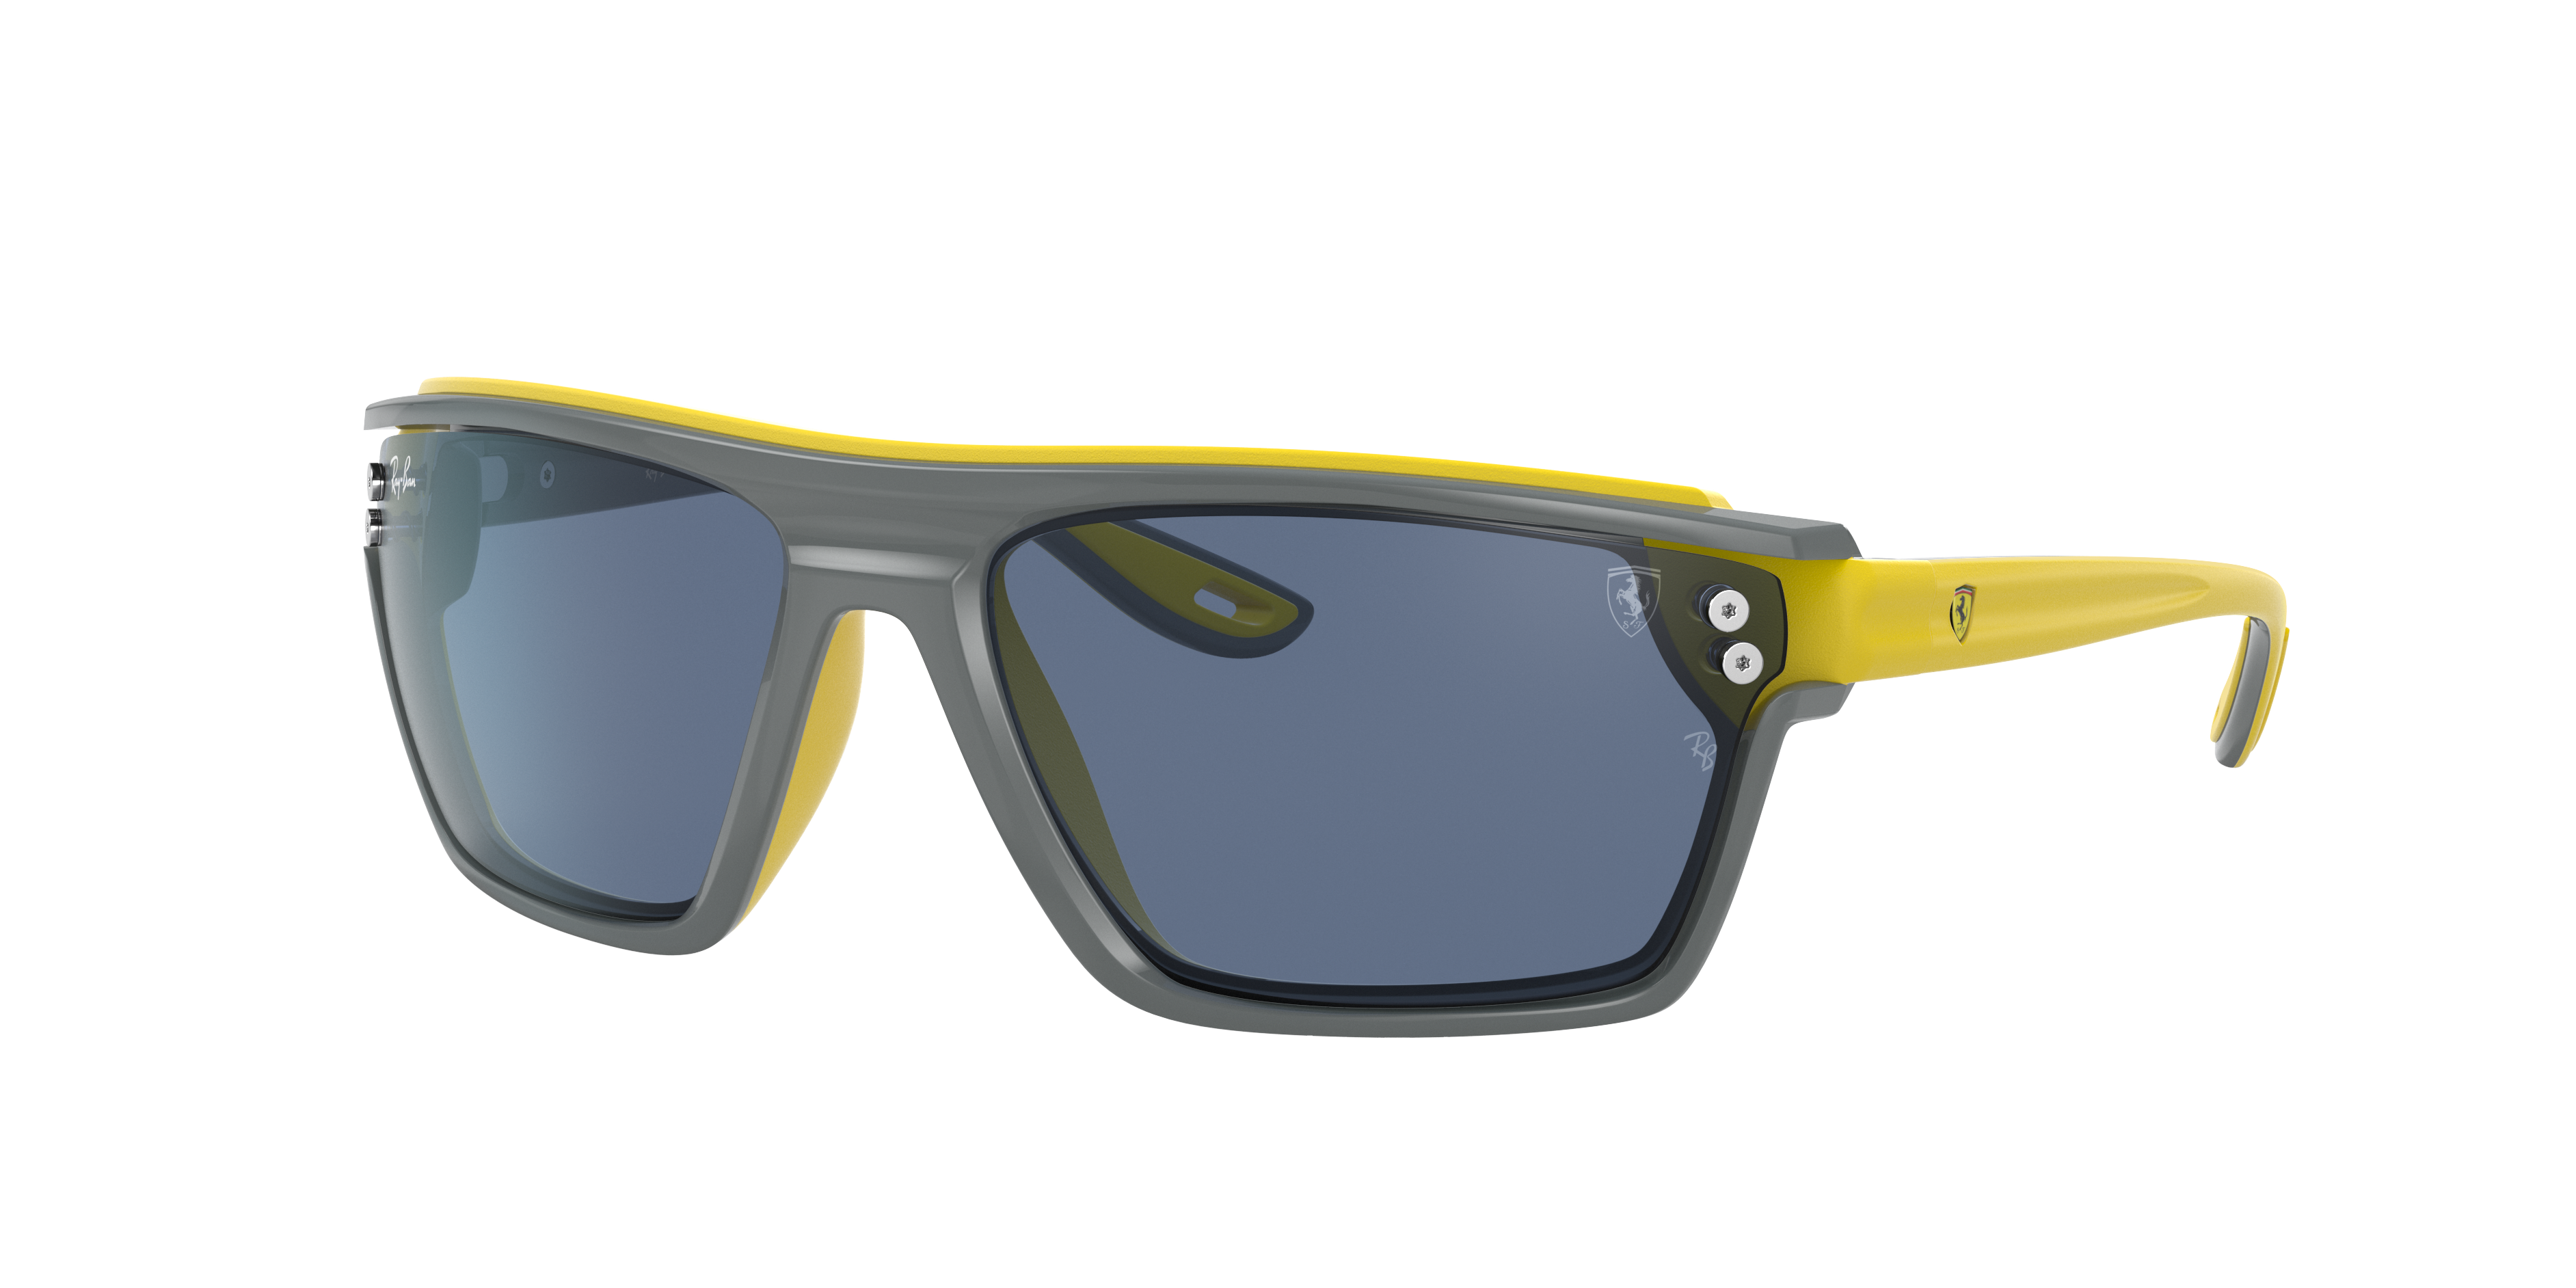 Rb4370m Scuderia Ferrari Collection Sunglasses in Yellow and Dark Blue | Ray -Ban®